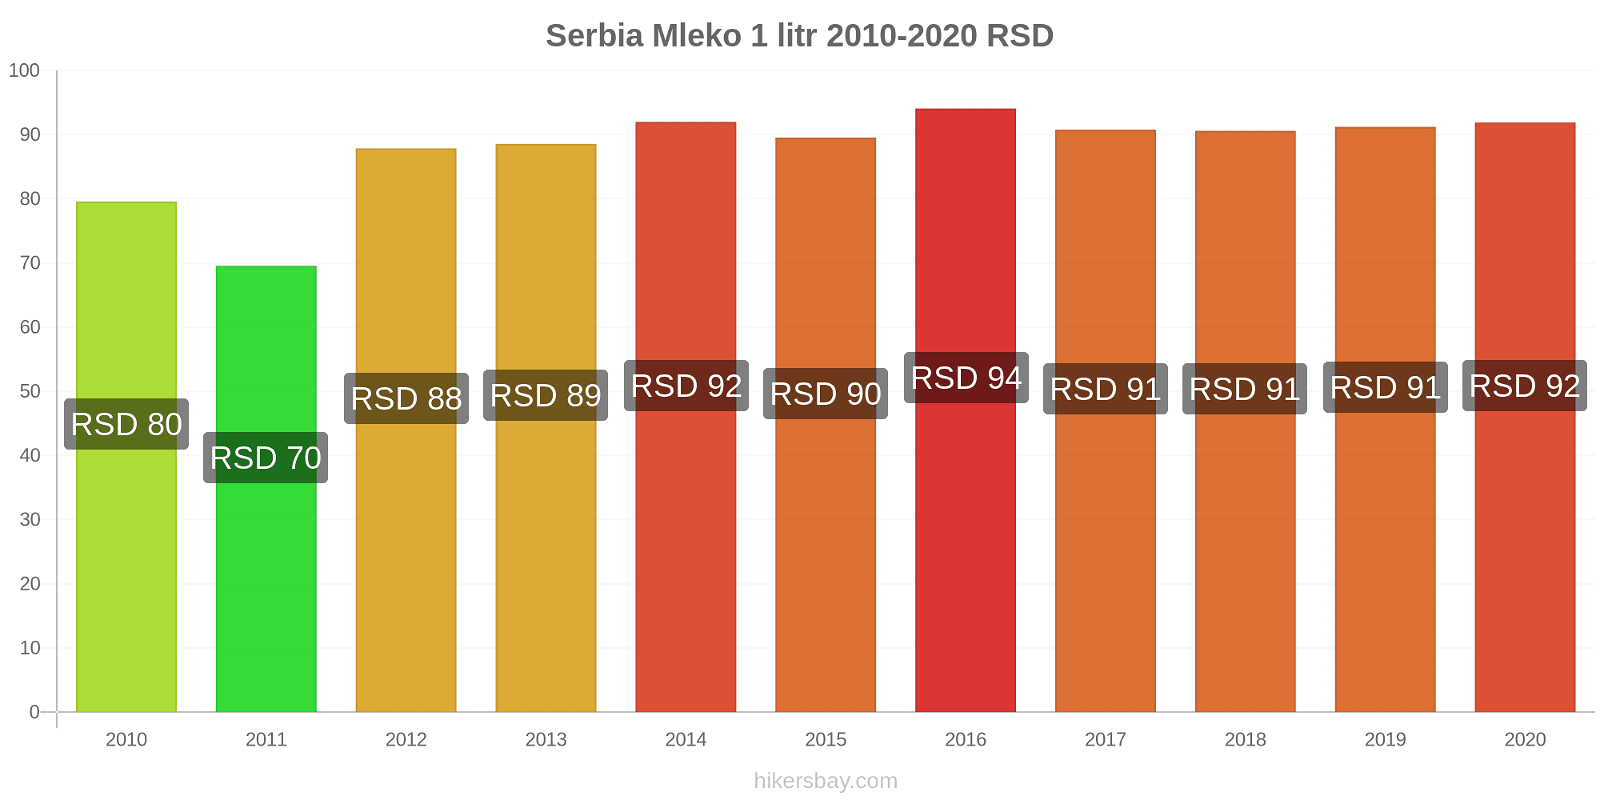 Serbia zmiany cen Mleko (1 litr) hikersbay.com